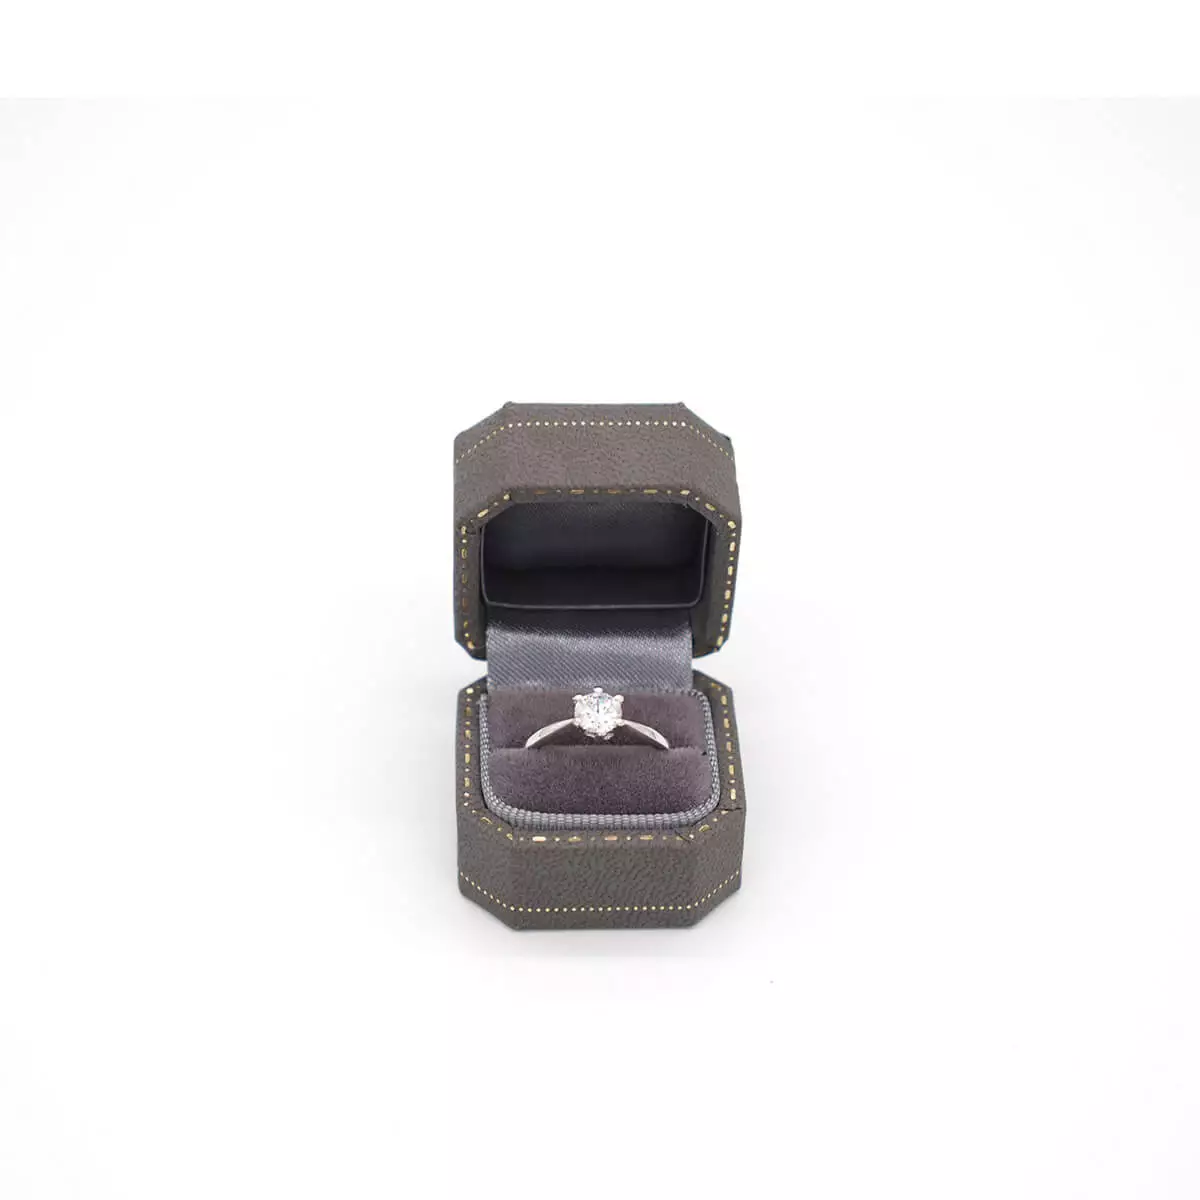 kaia ring box in grey opening